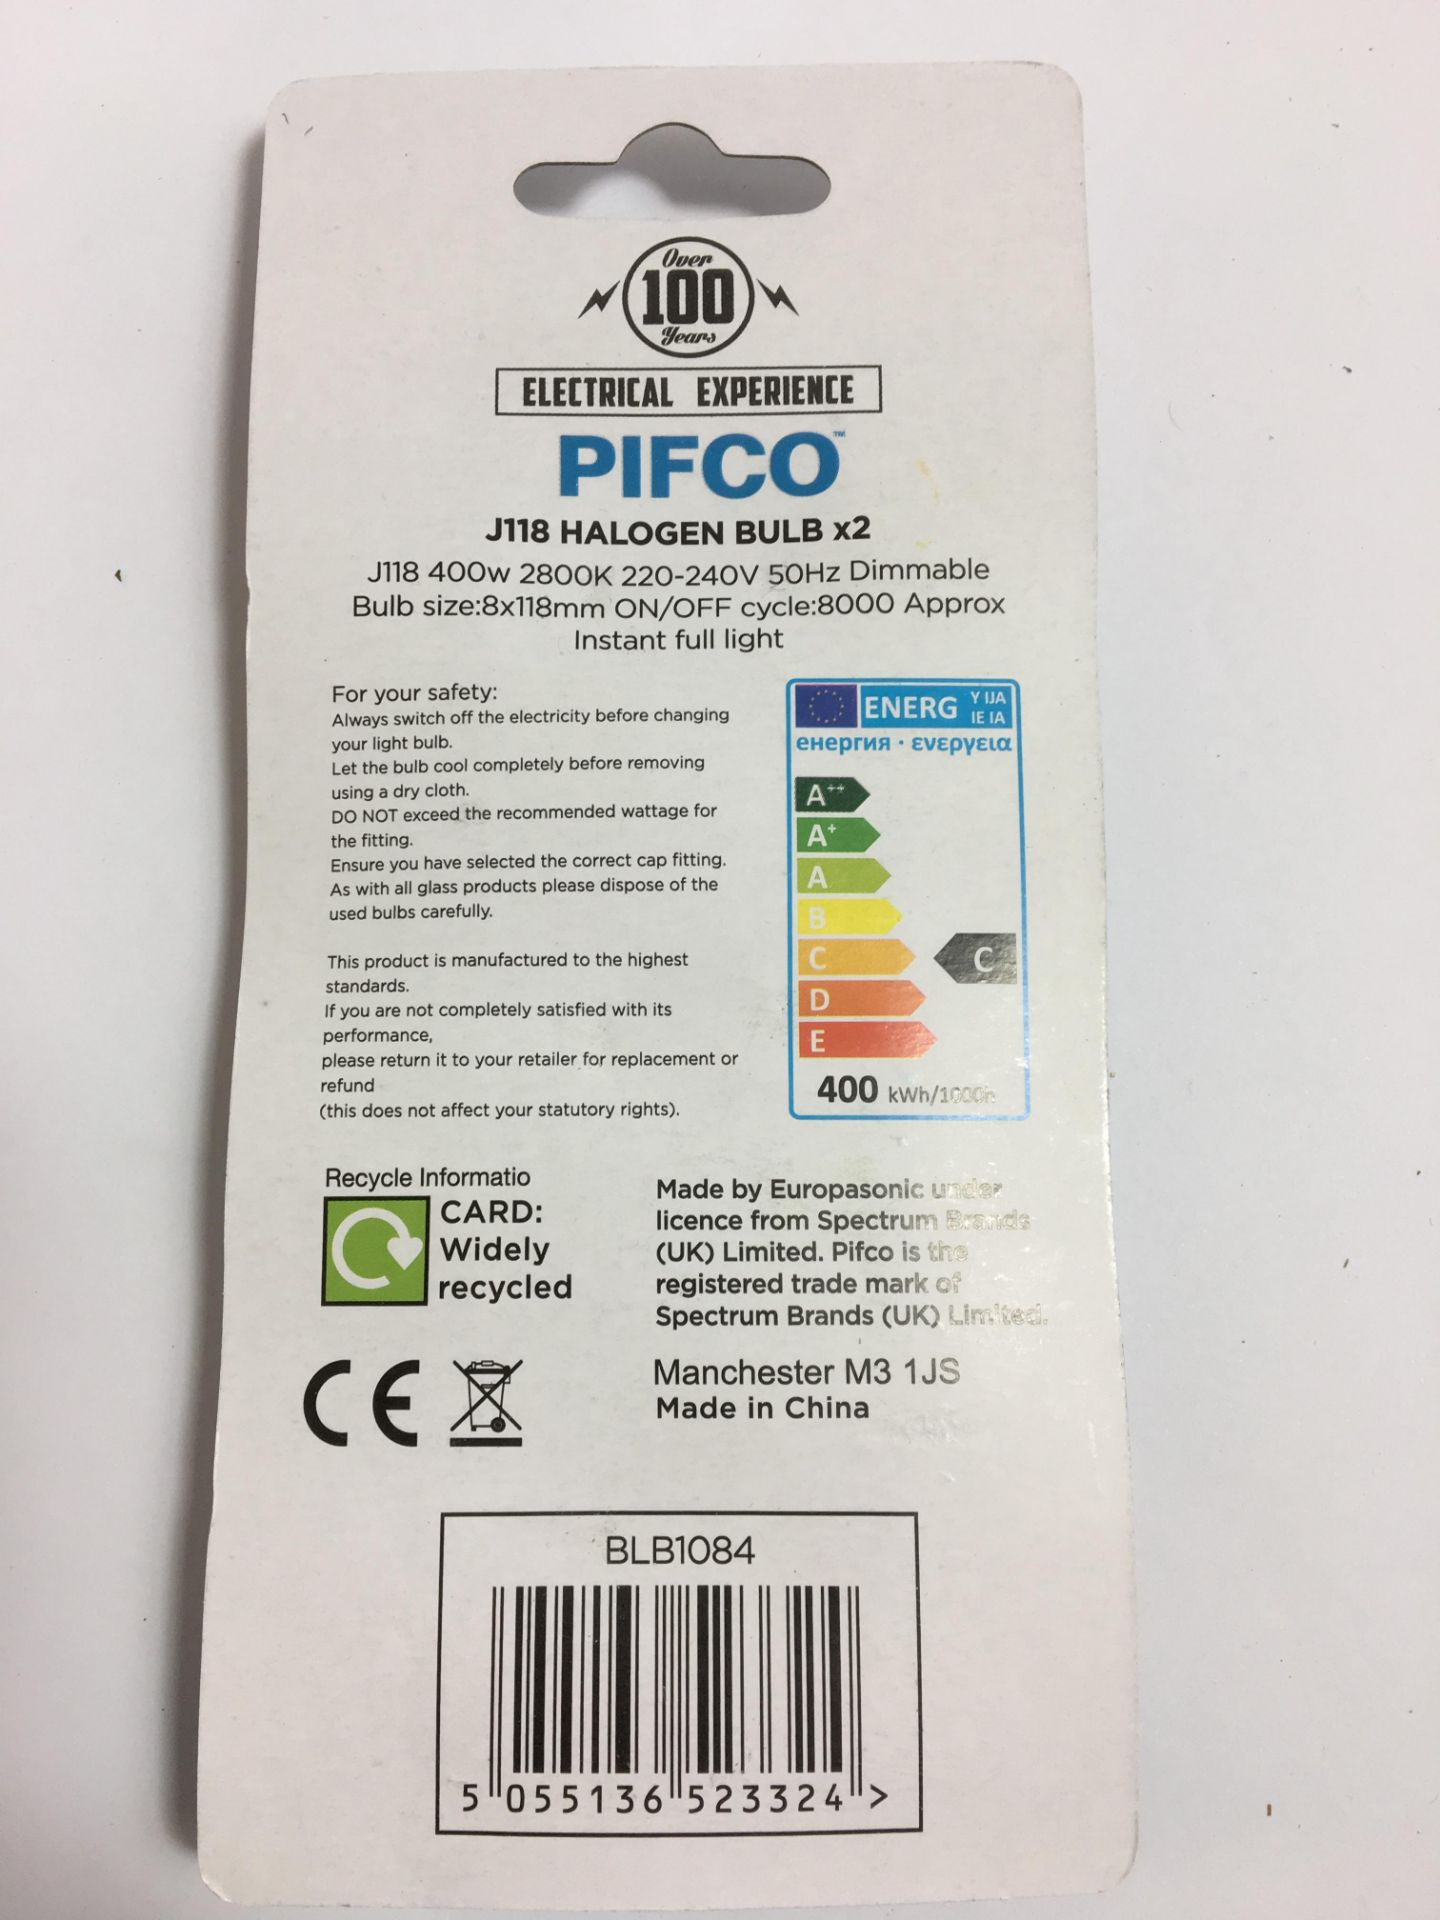 12 x Pifco 8800 Lumen - 500W bulbs - Image 3 of 3